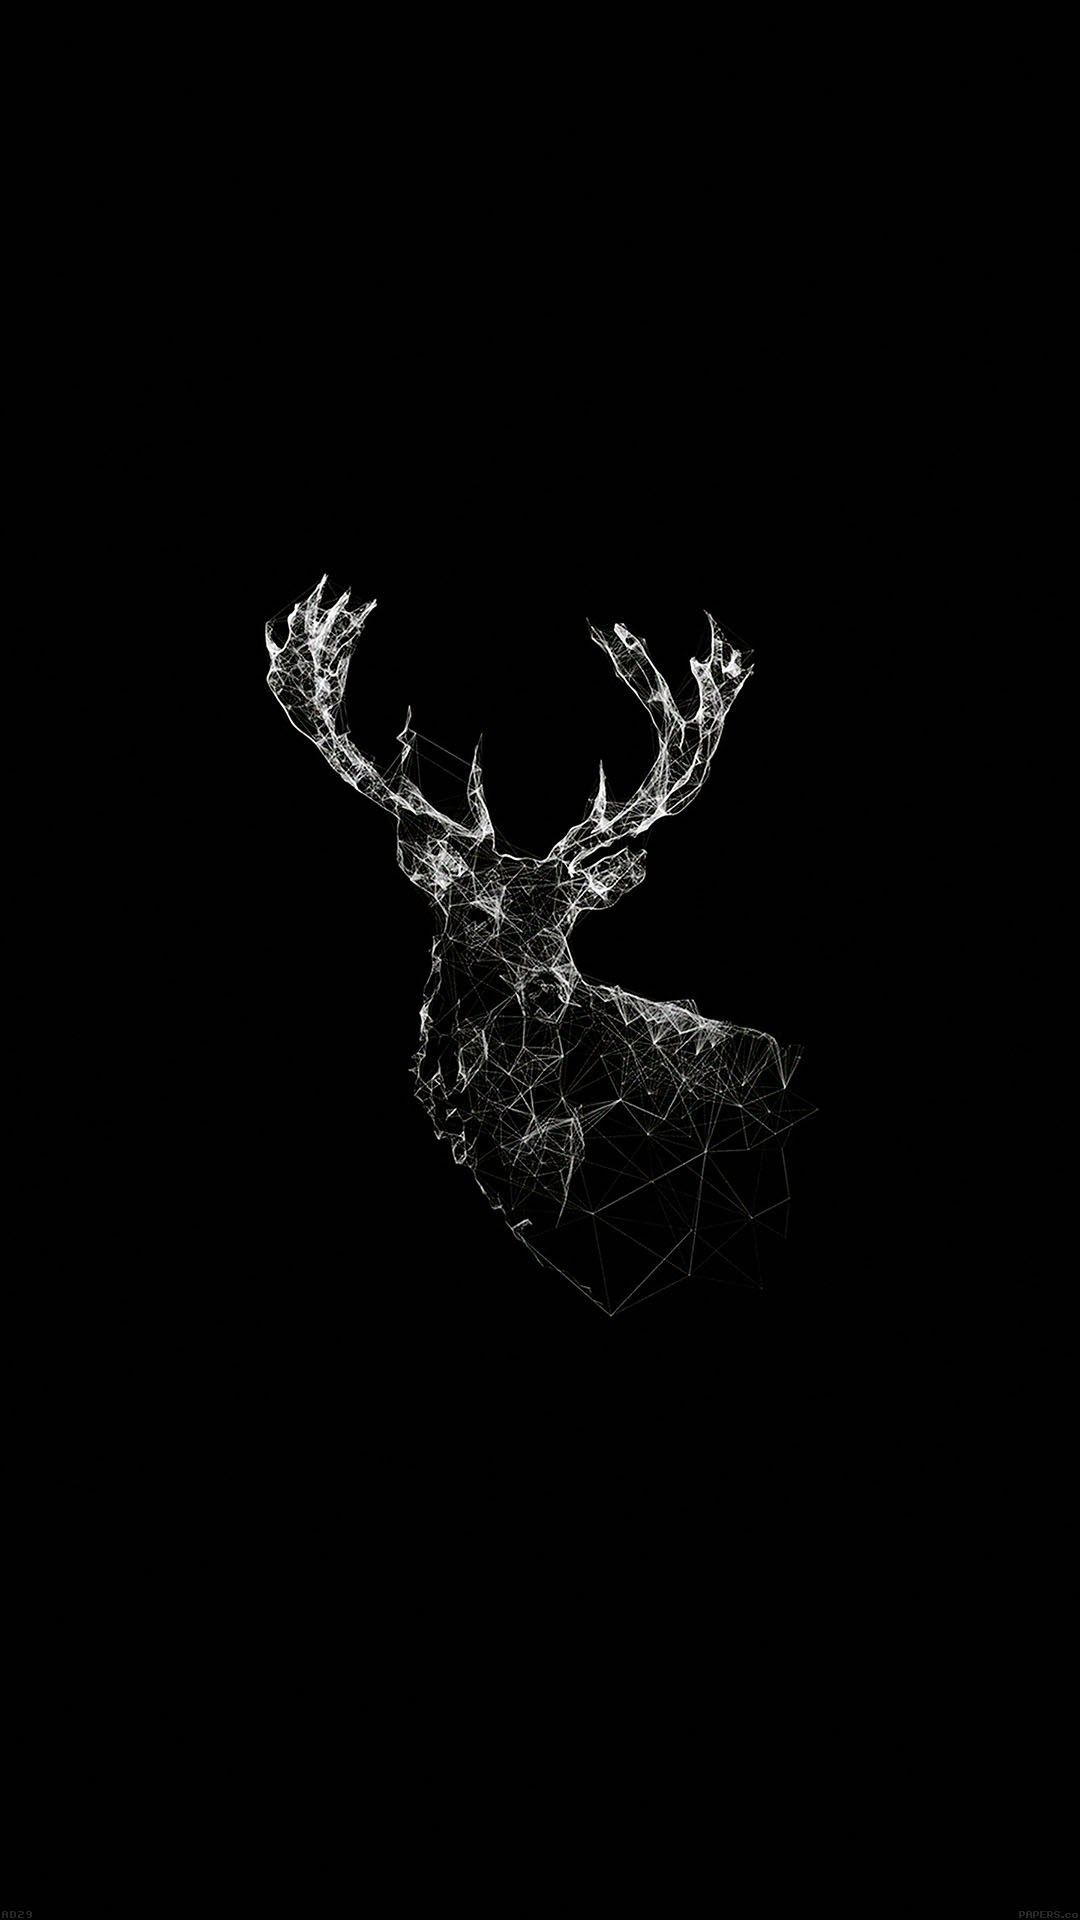 iWallpaper. Deer wallpaper, iPhone 6 wallpaper, Cool black wallpaper